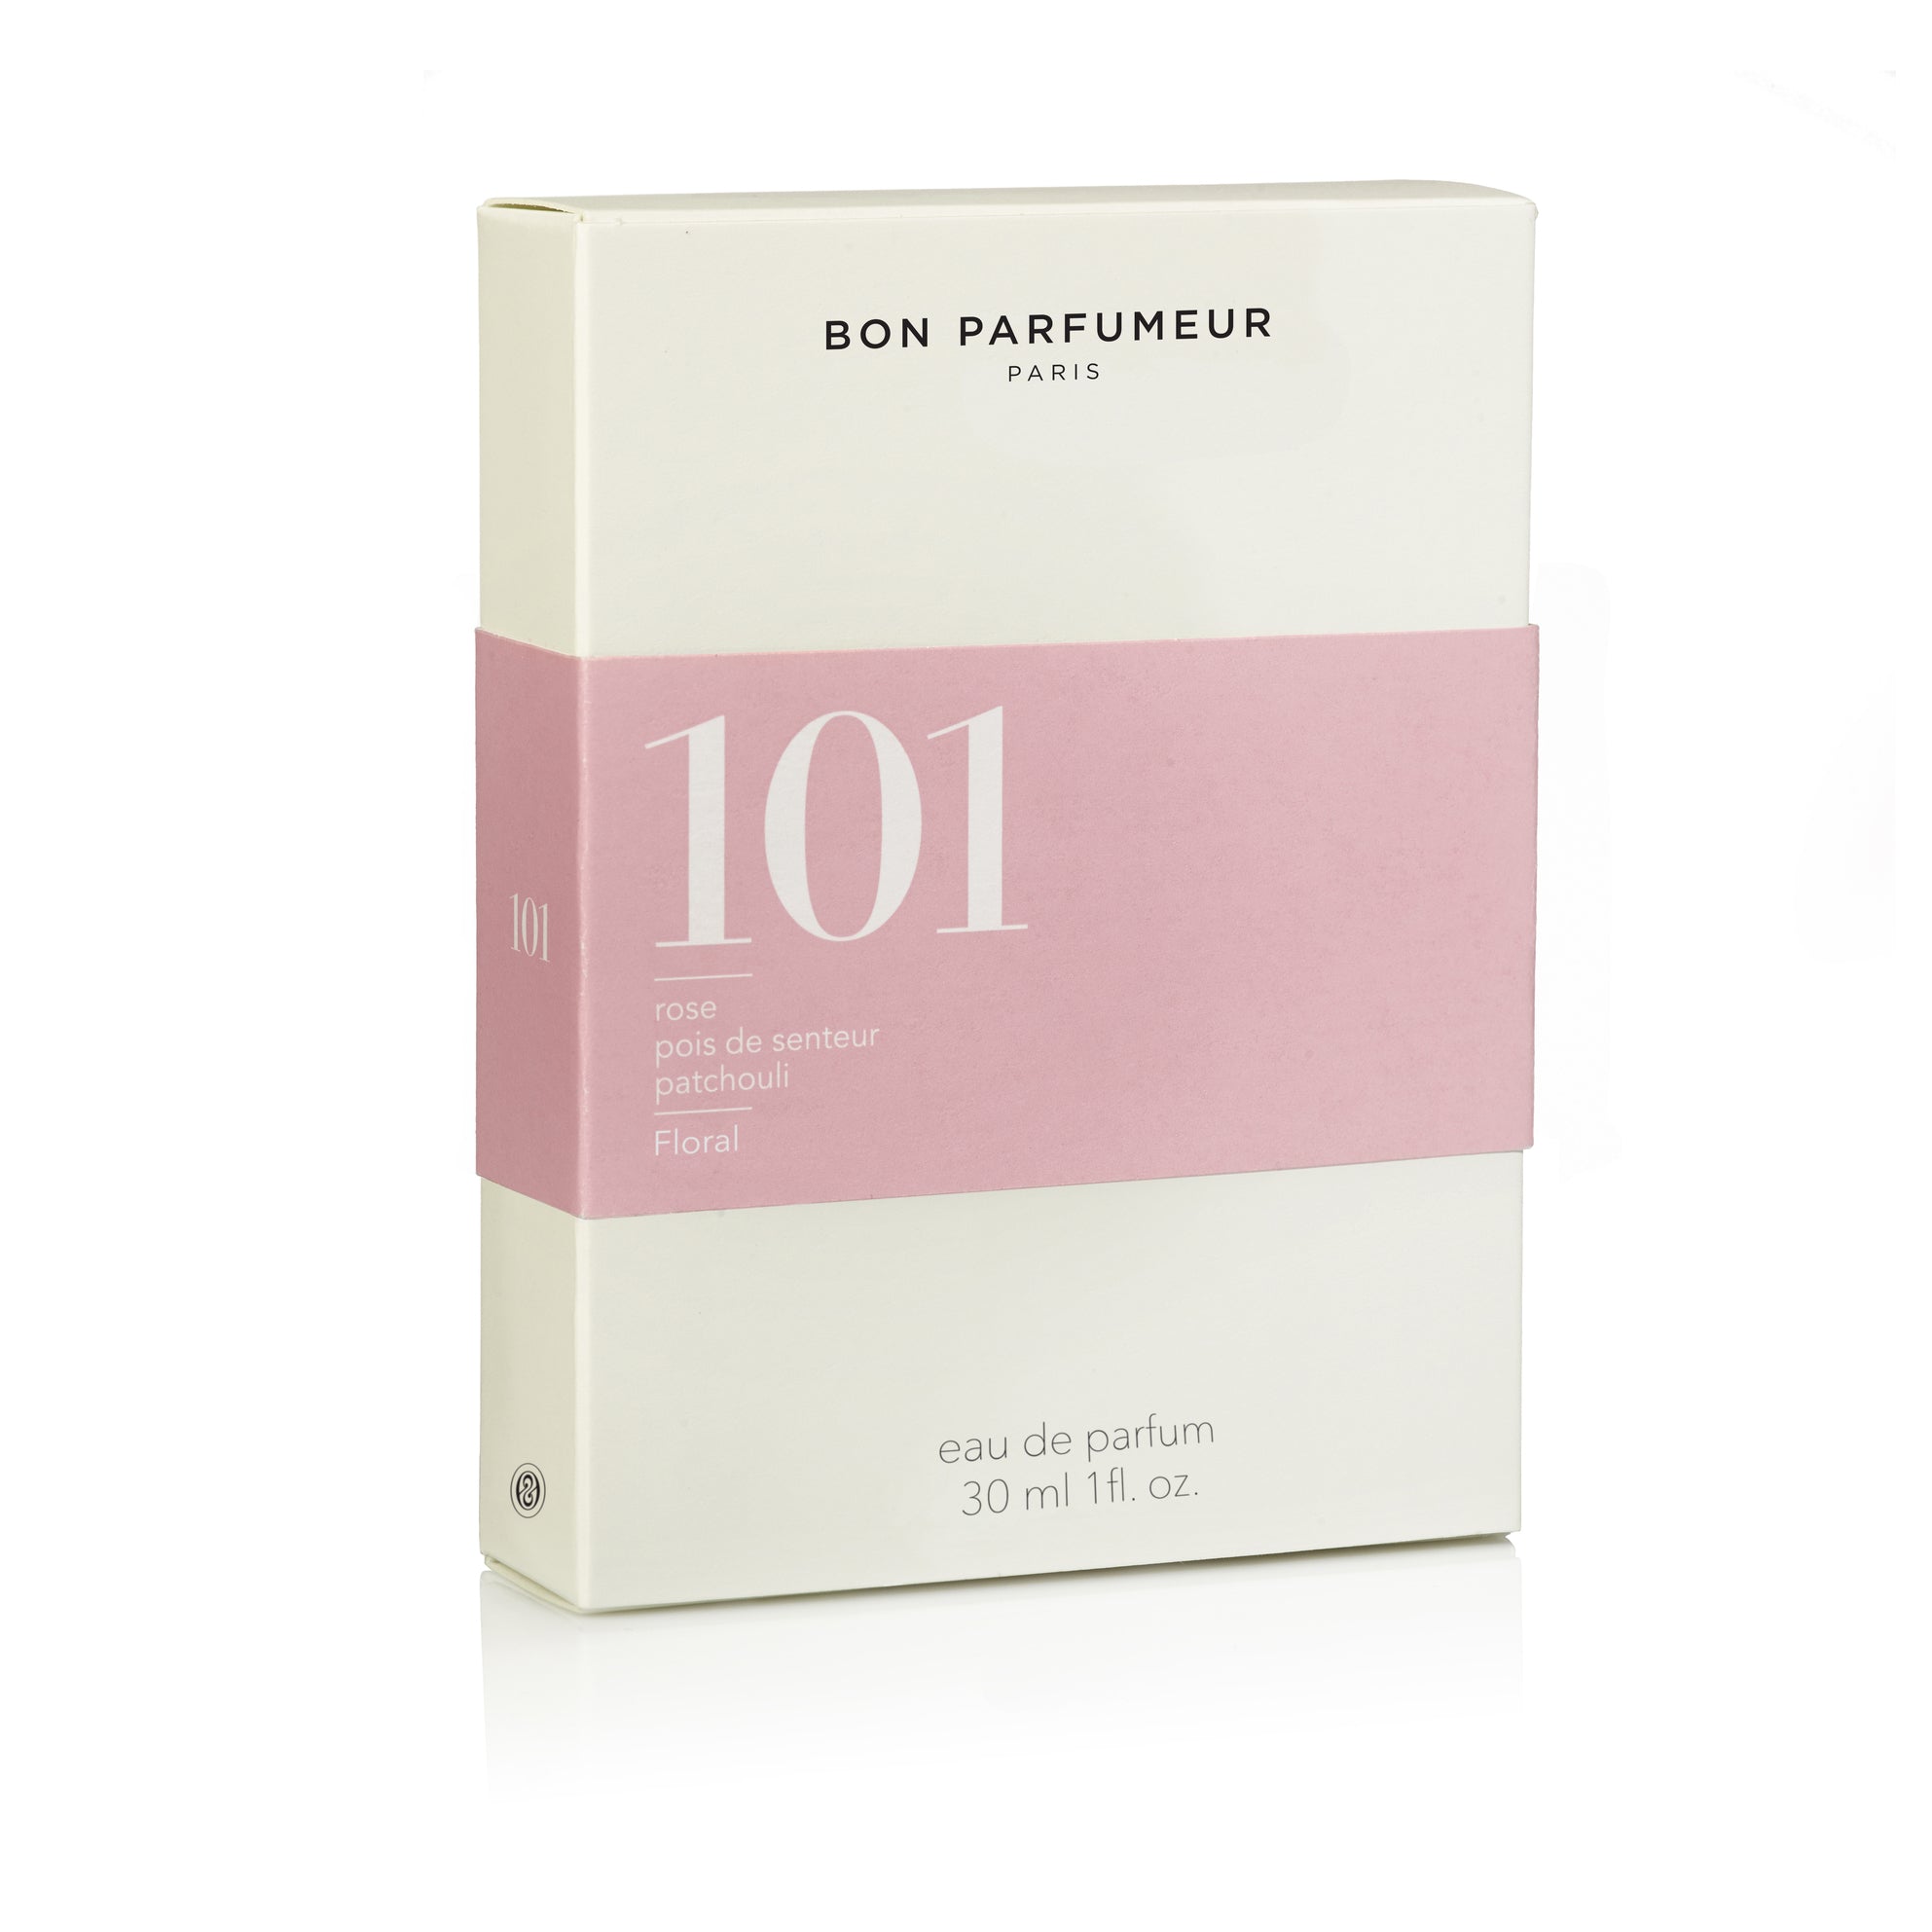 Bon Parfumeur - Les Classiques 101 - Danae Profumeria